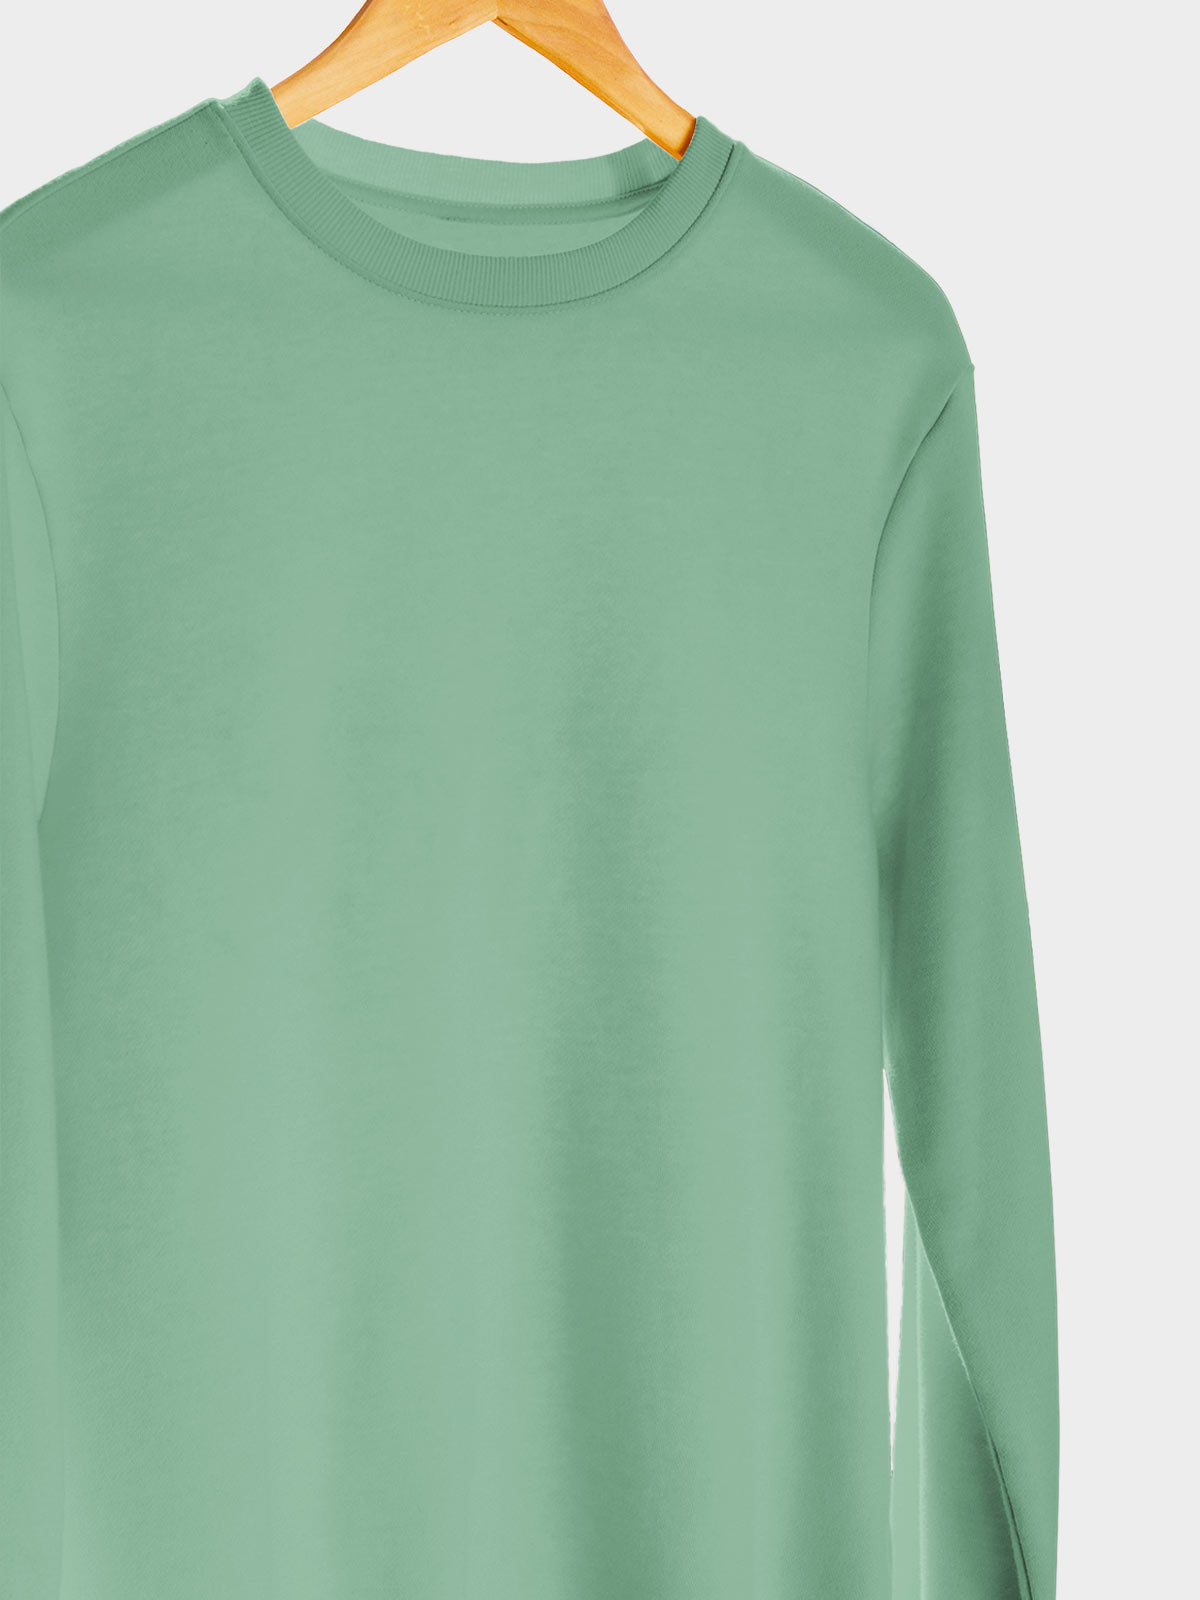 Coral Peach & Sage Green Unisex Plain Sweatshirt Combo